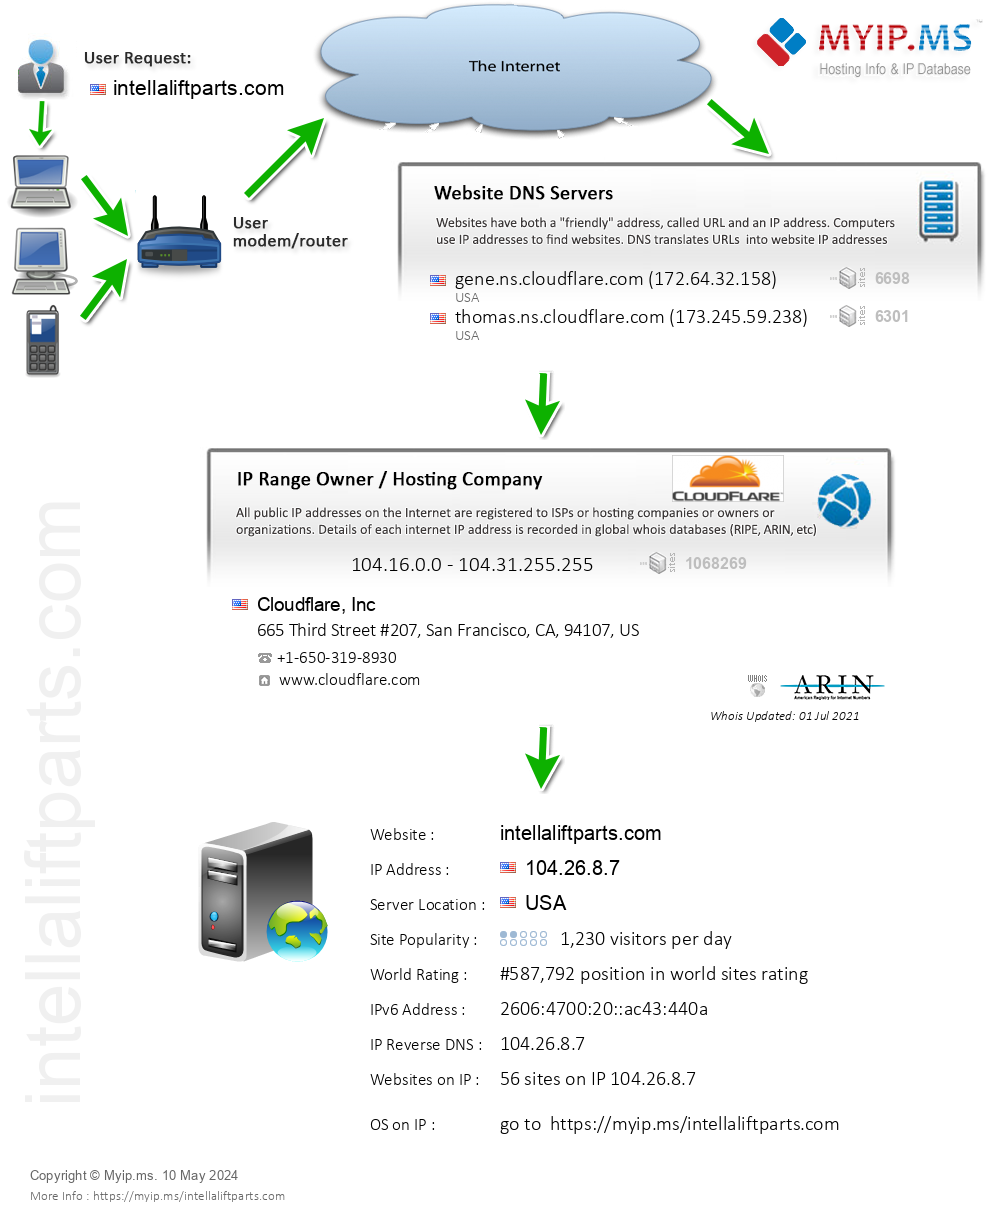 Intellaliftparts.com - Website Hosting Visual IP Diagram